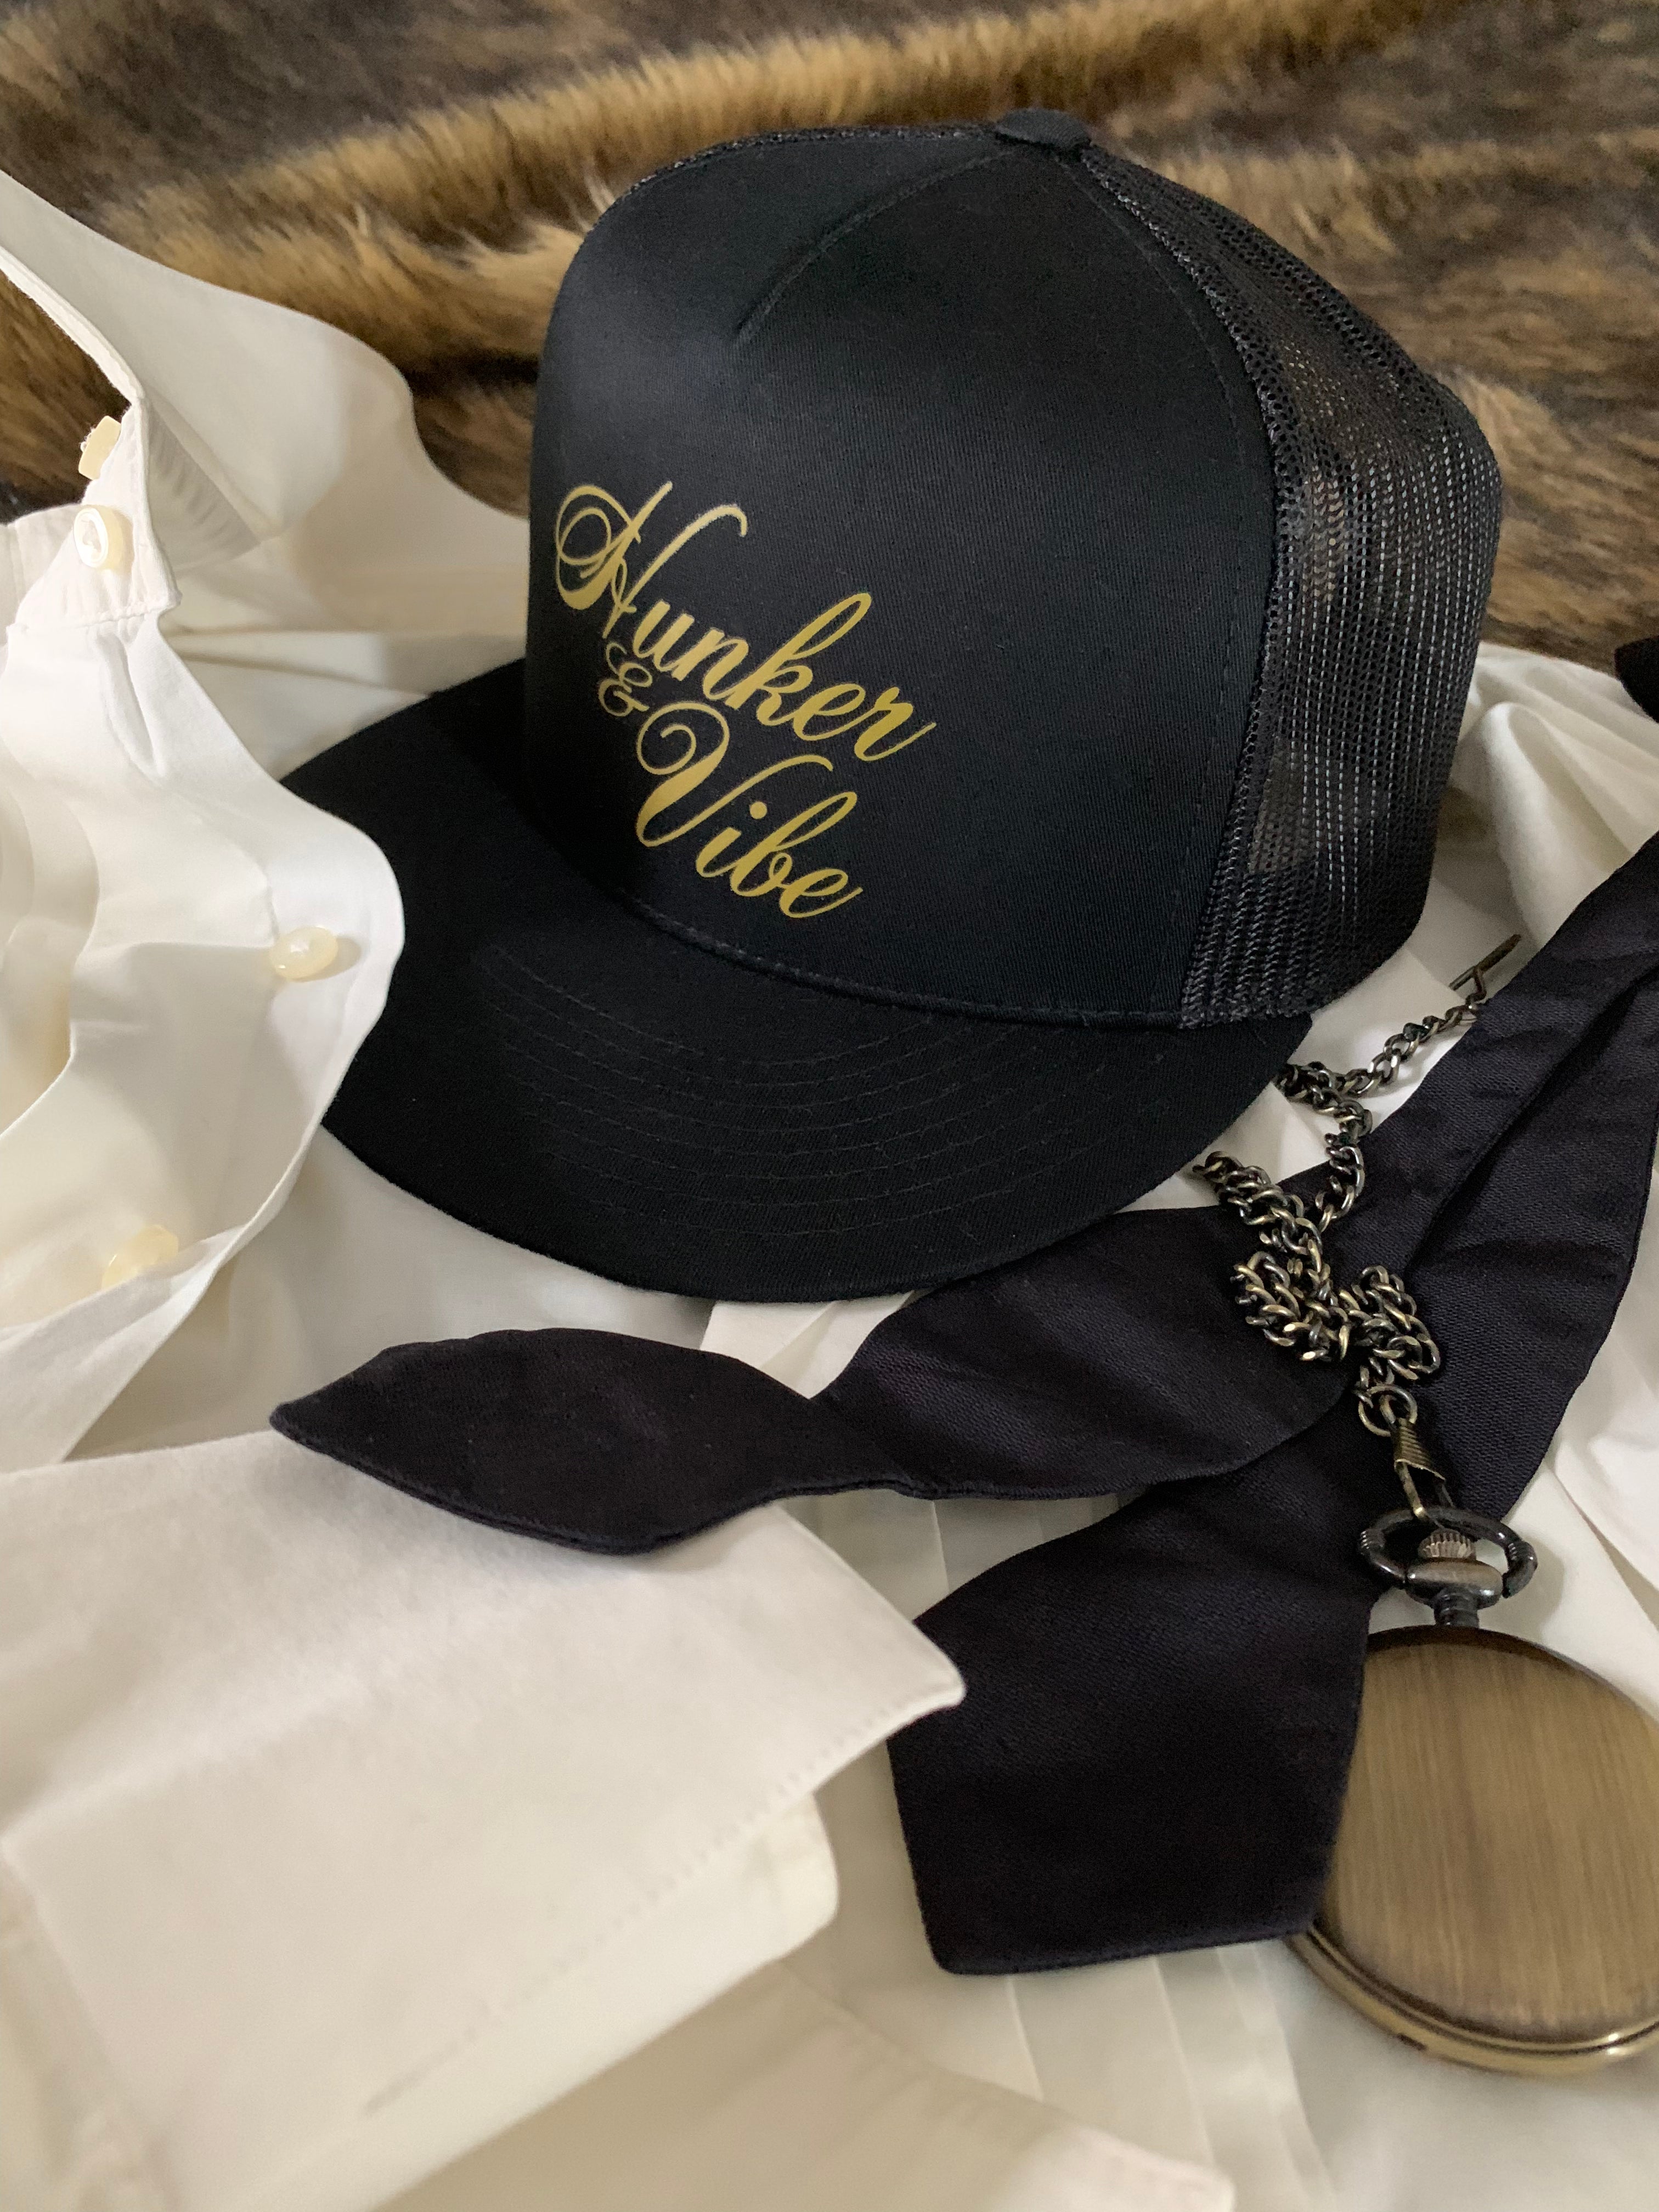 The Black Signarure Hunker & Vibe Trucker Hat